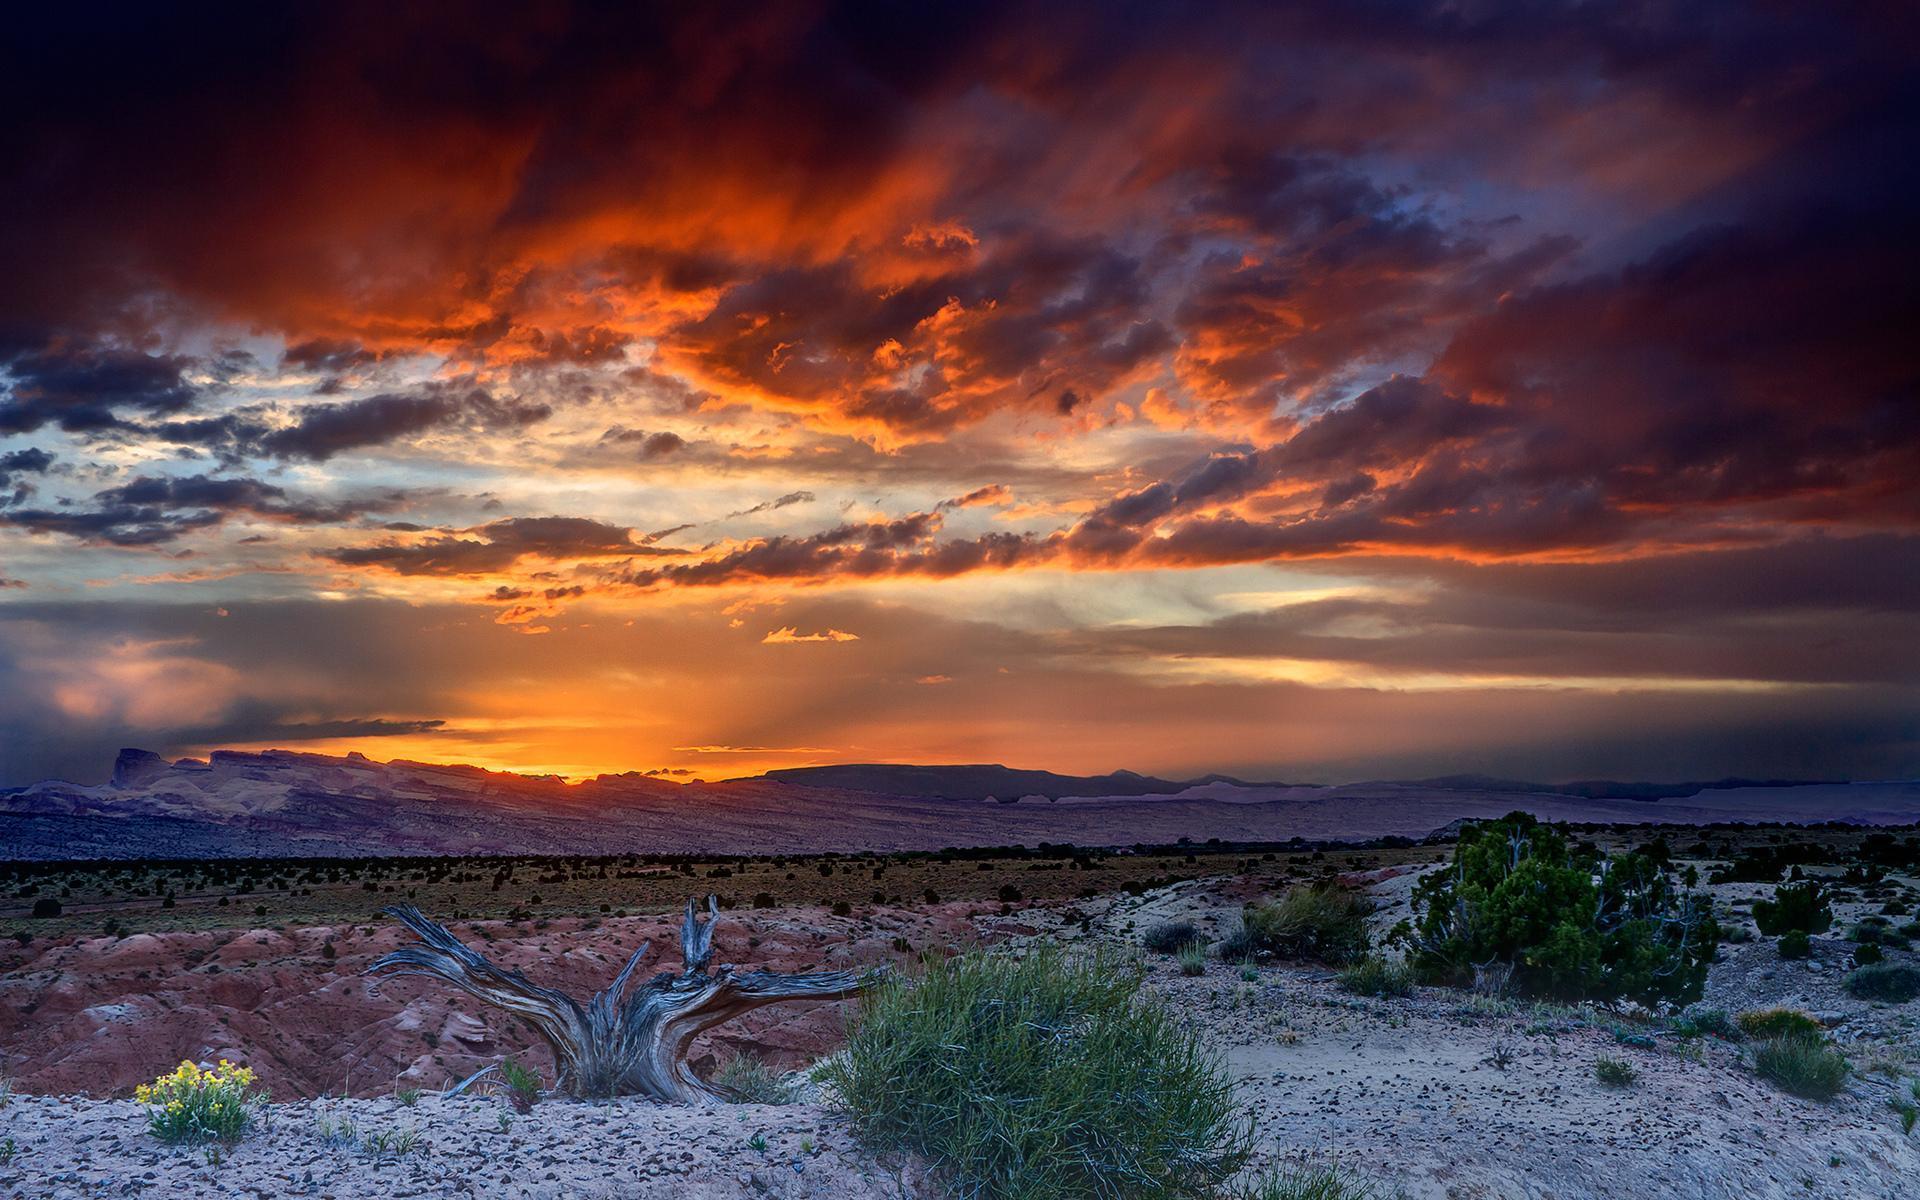 999 Desert Sunset Pictures  Download Free Images on Unsplash